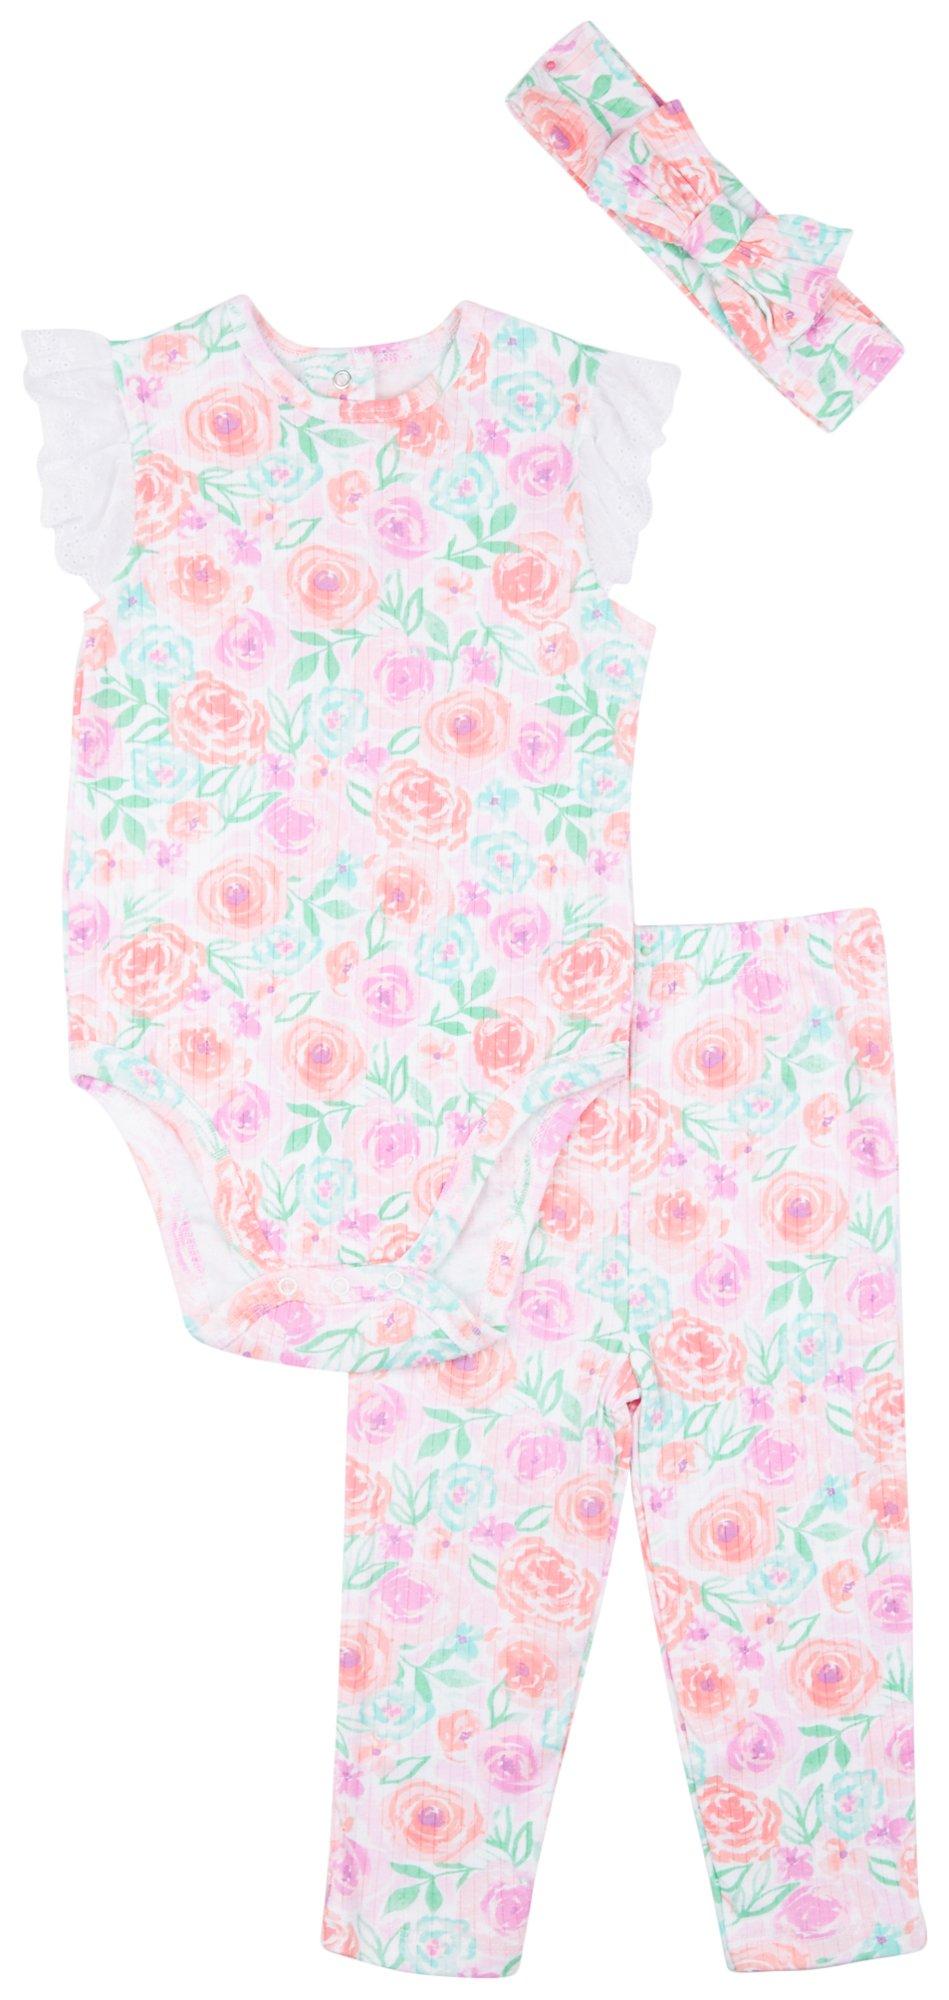 Little Me Baby Girls 3 Pc. Floral Print Pant Set